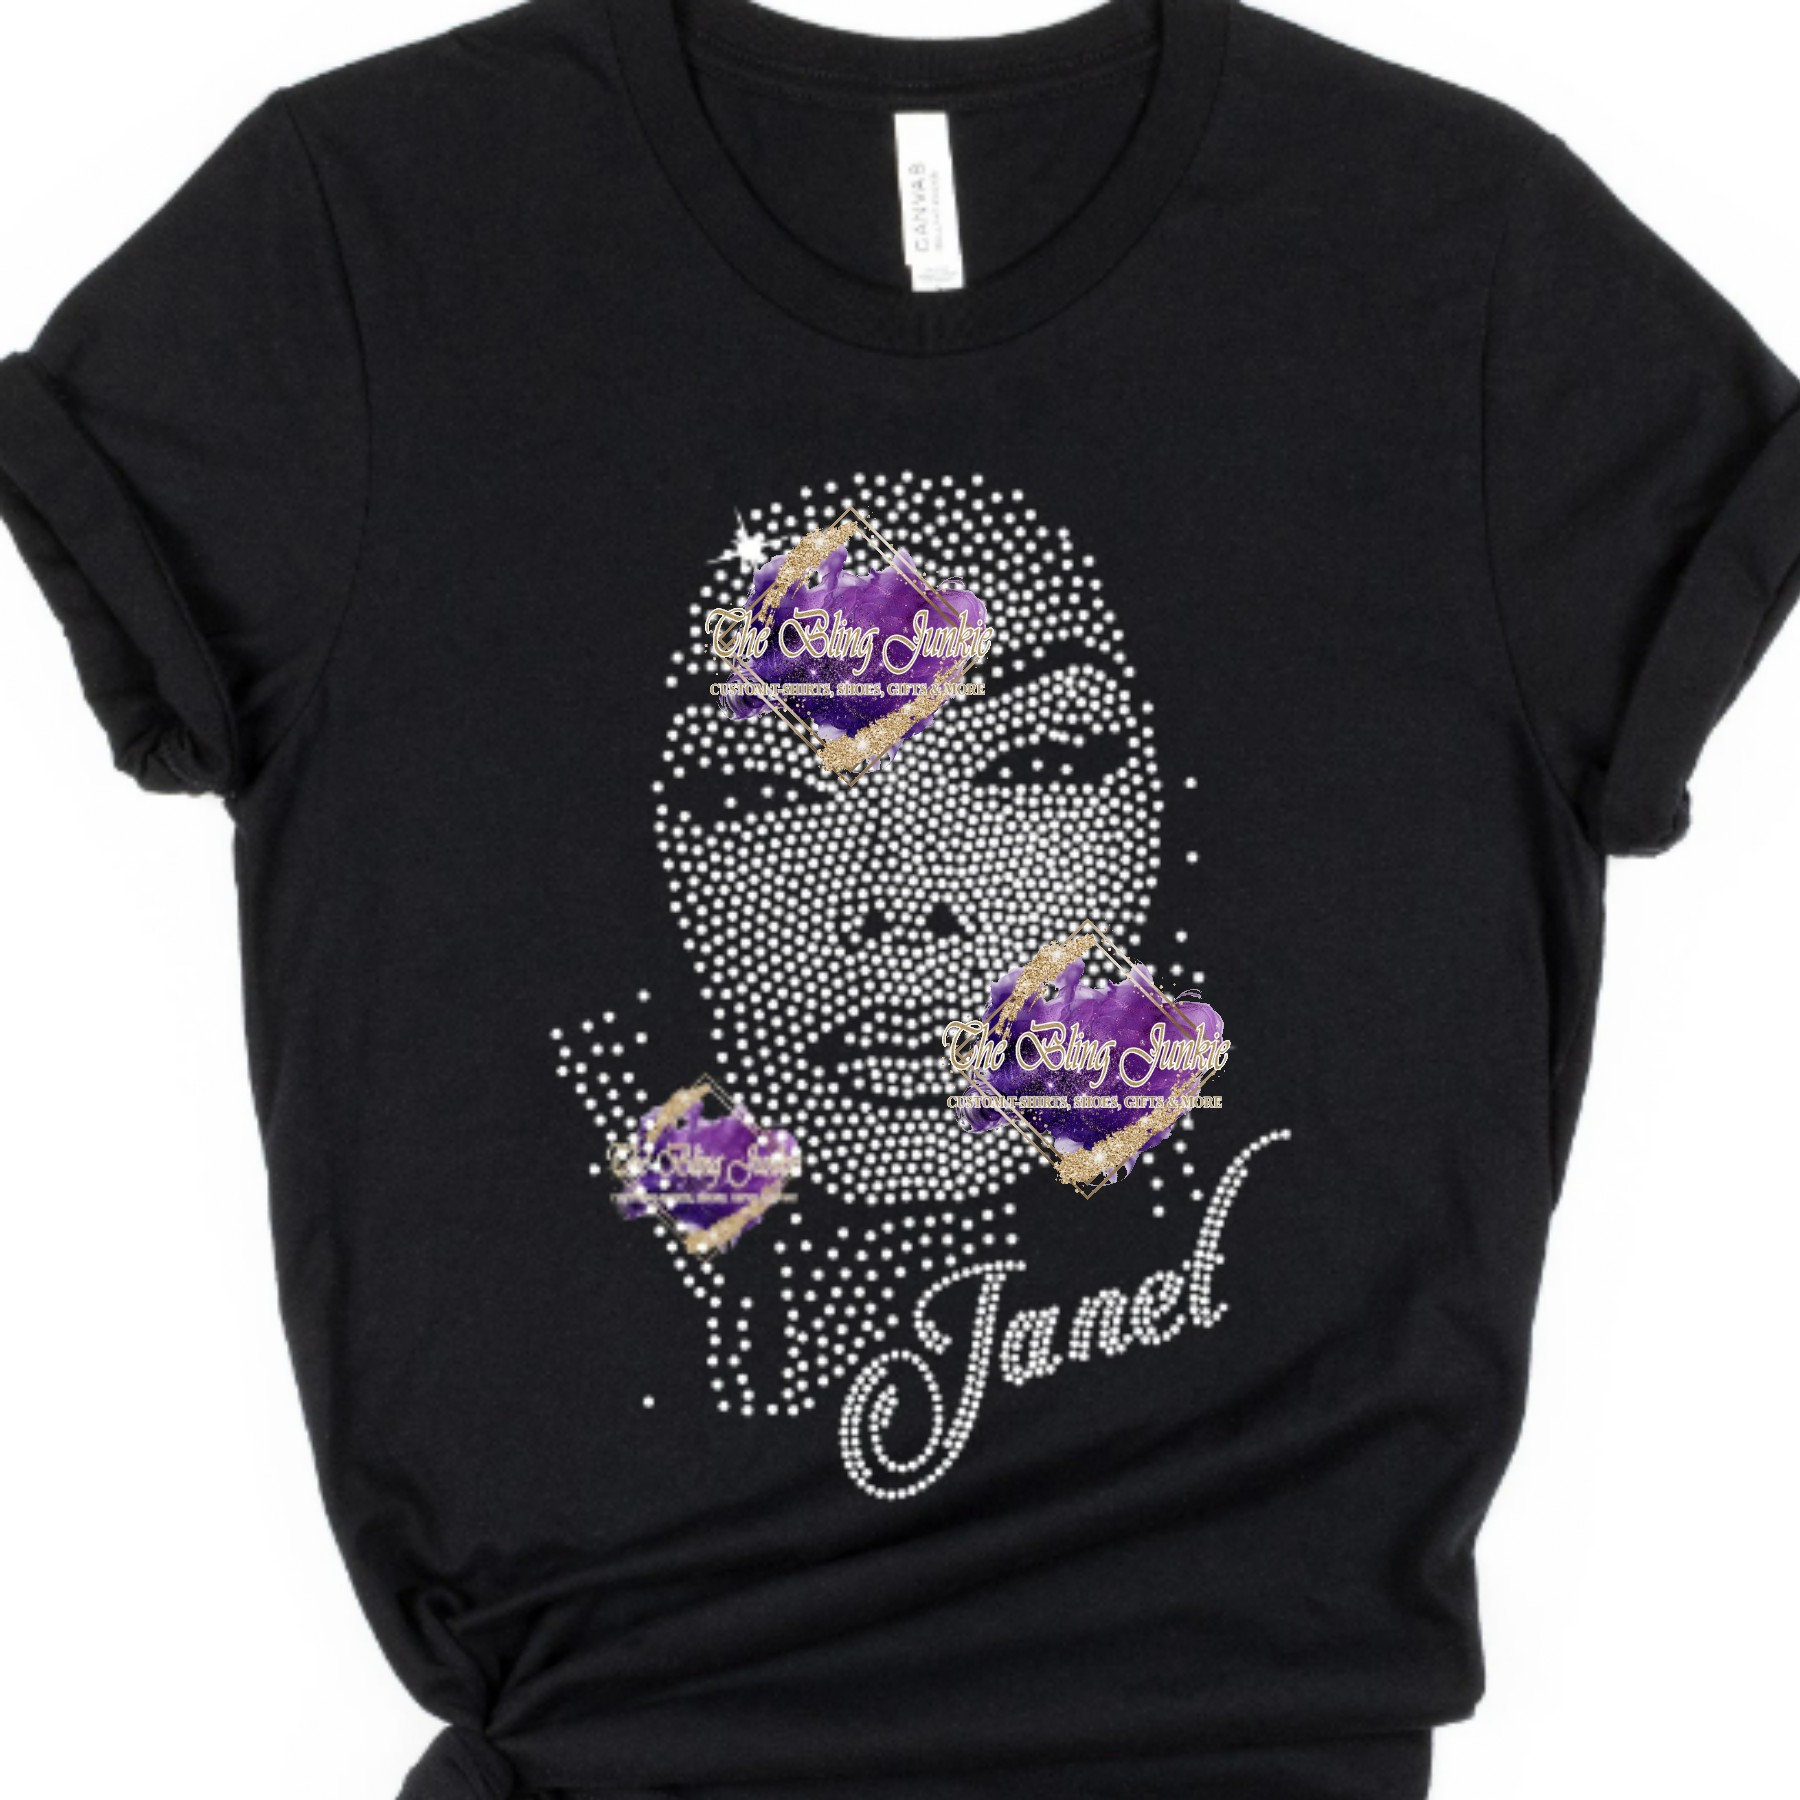 Janet Jackson Inspired Bling T-shirt, Janet Jackson T-shirt, Janet